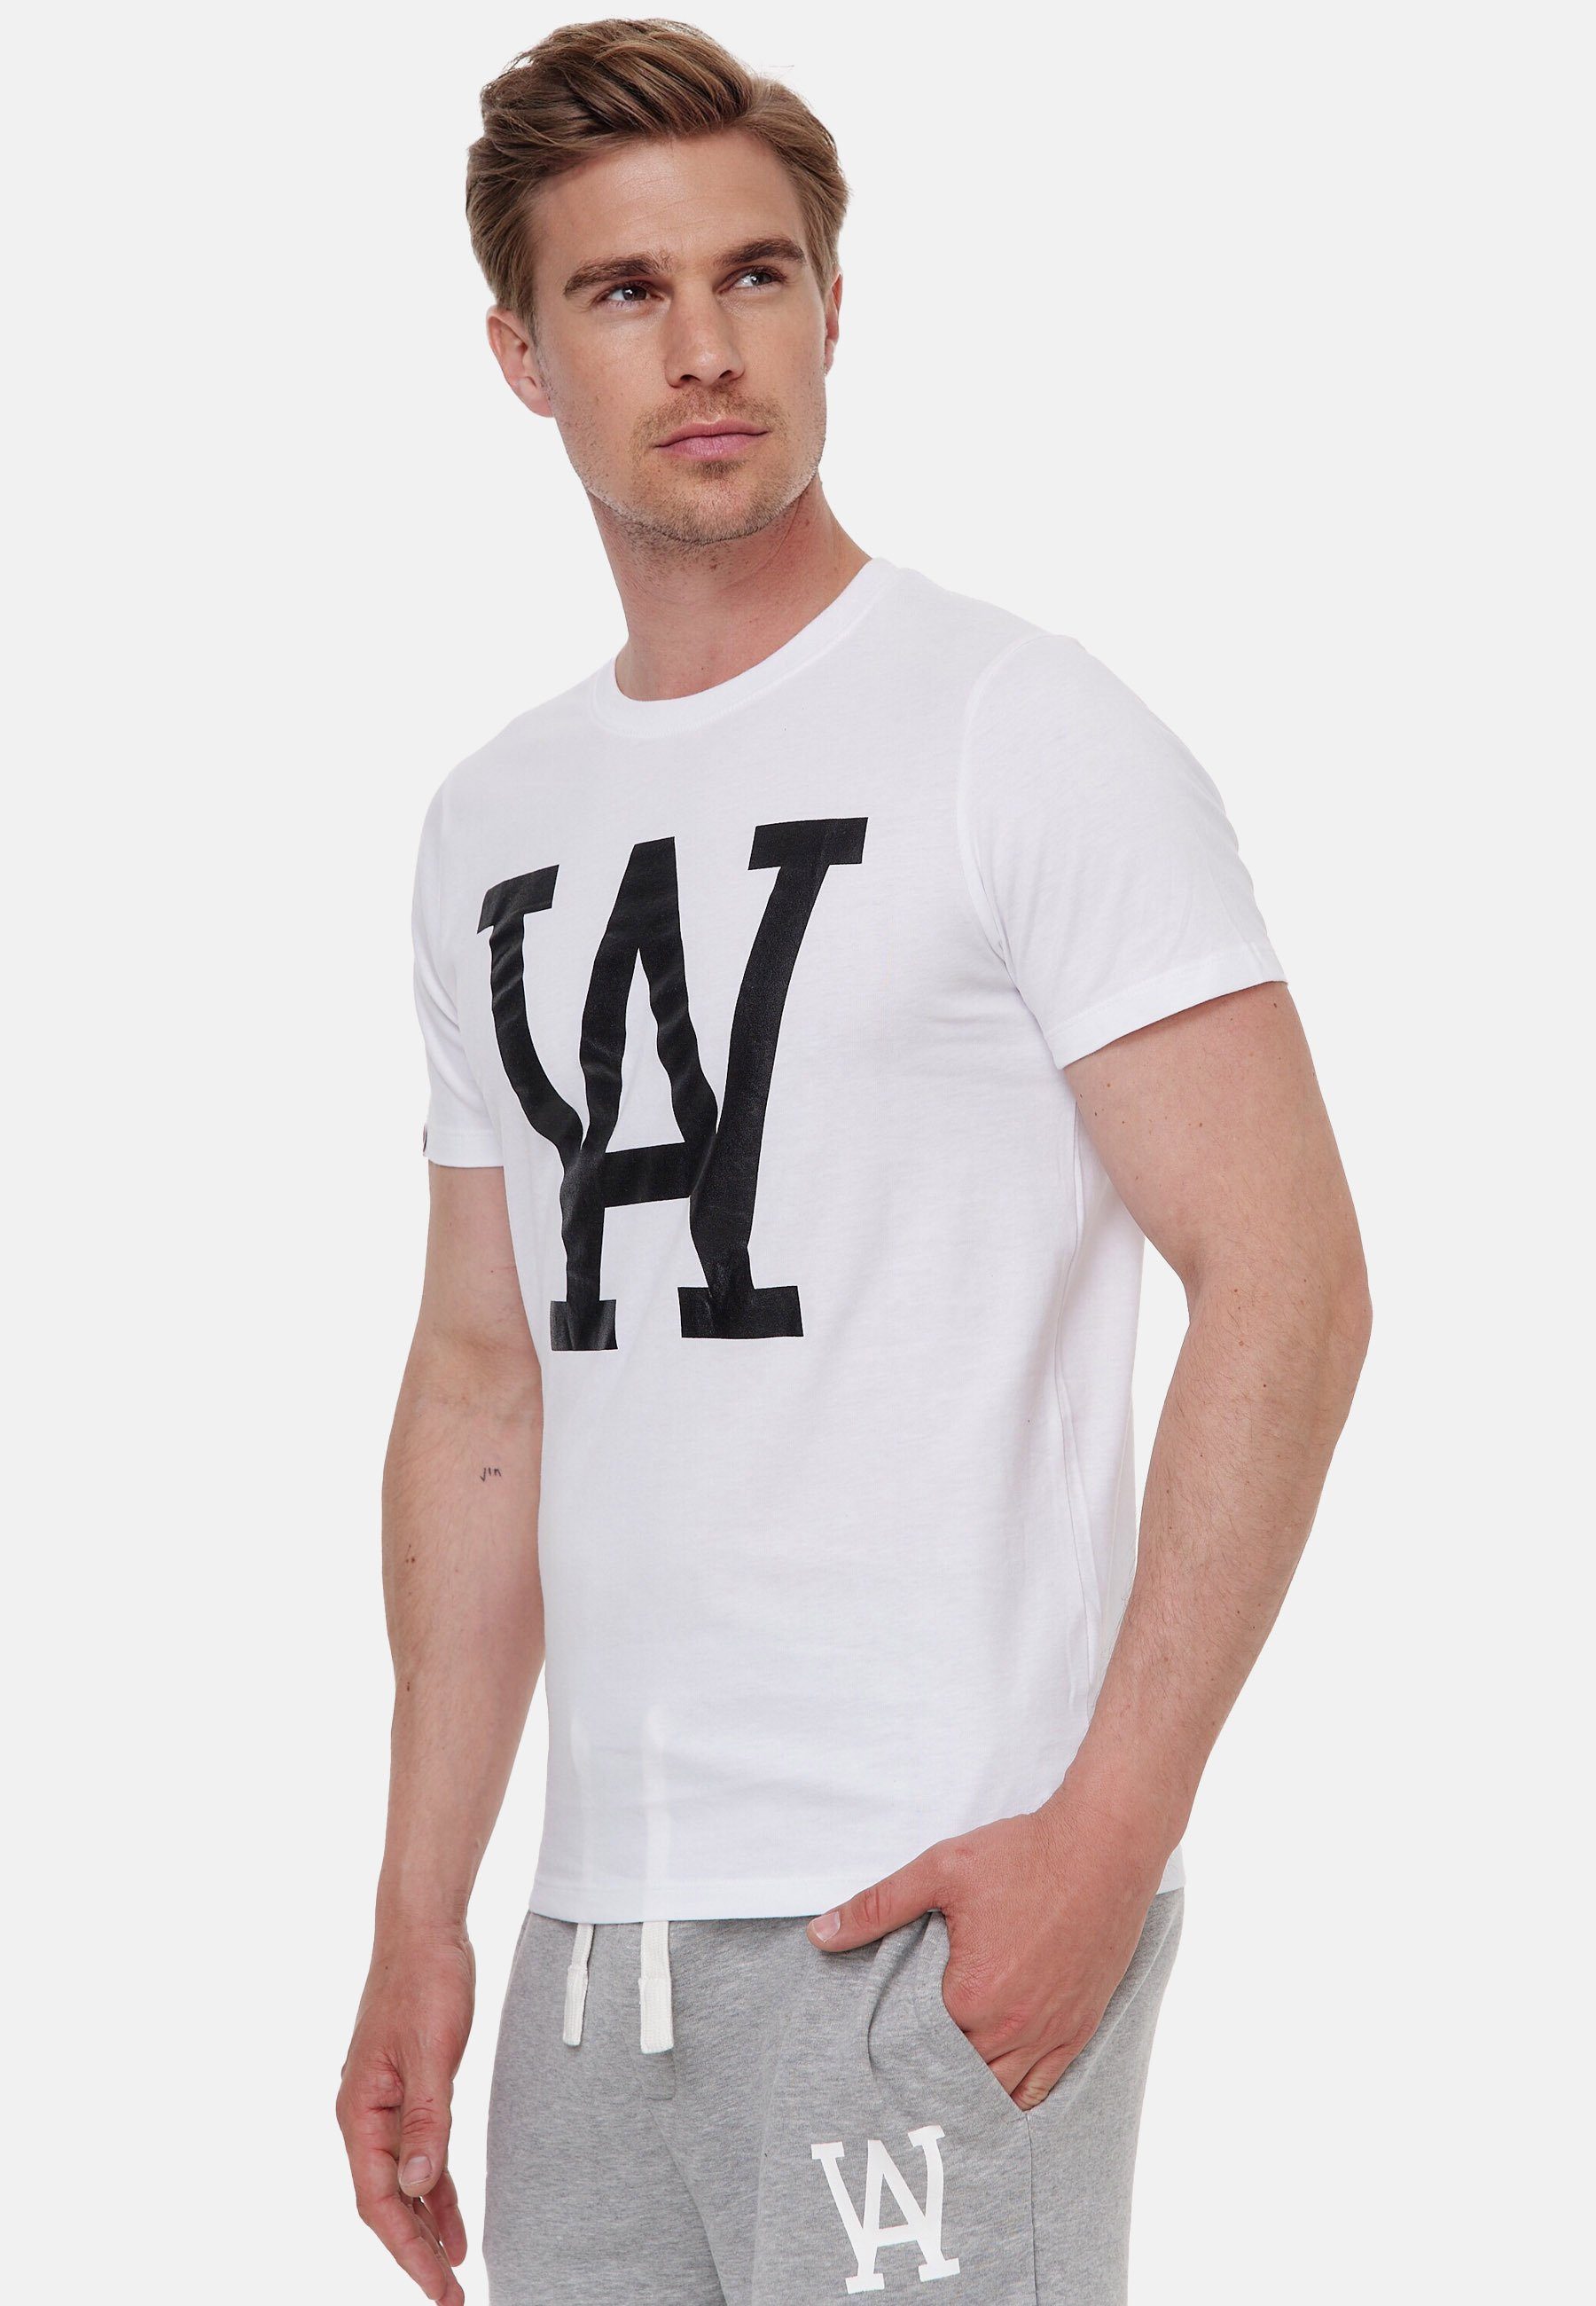 Woldo Athletic Big WA T-Shirt weiß-schwarz T-Shirt